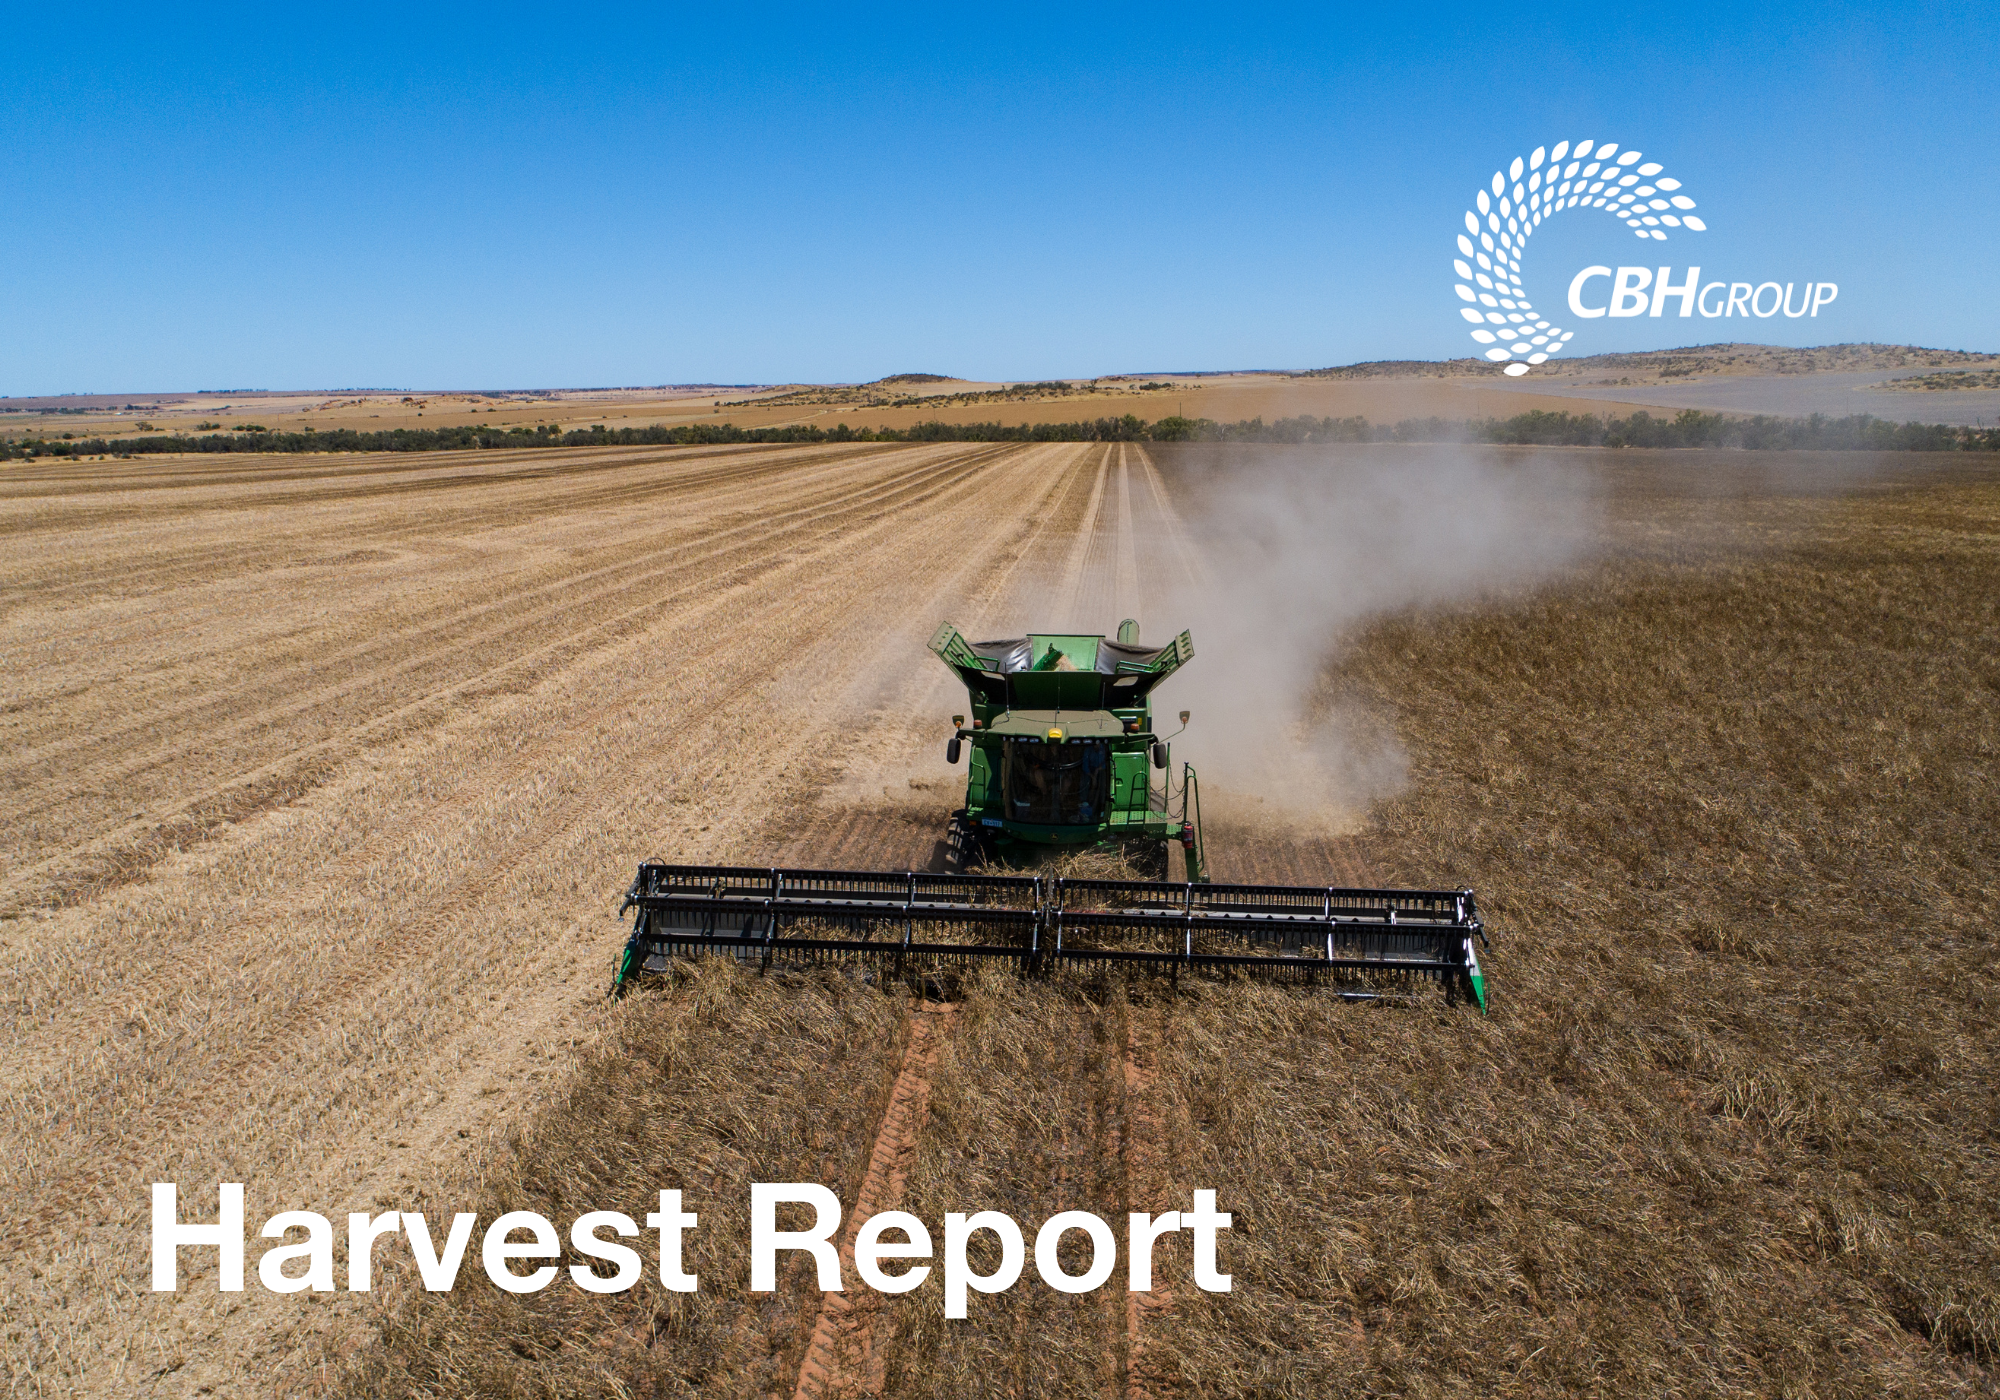 CBH Harvest Report 2021/22